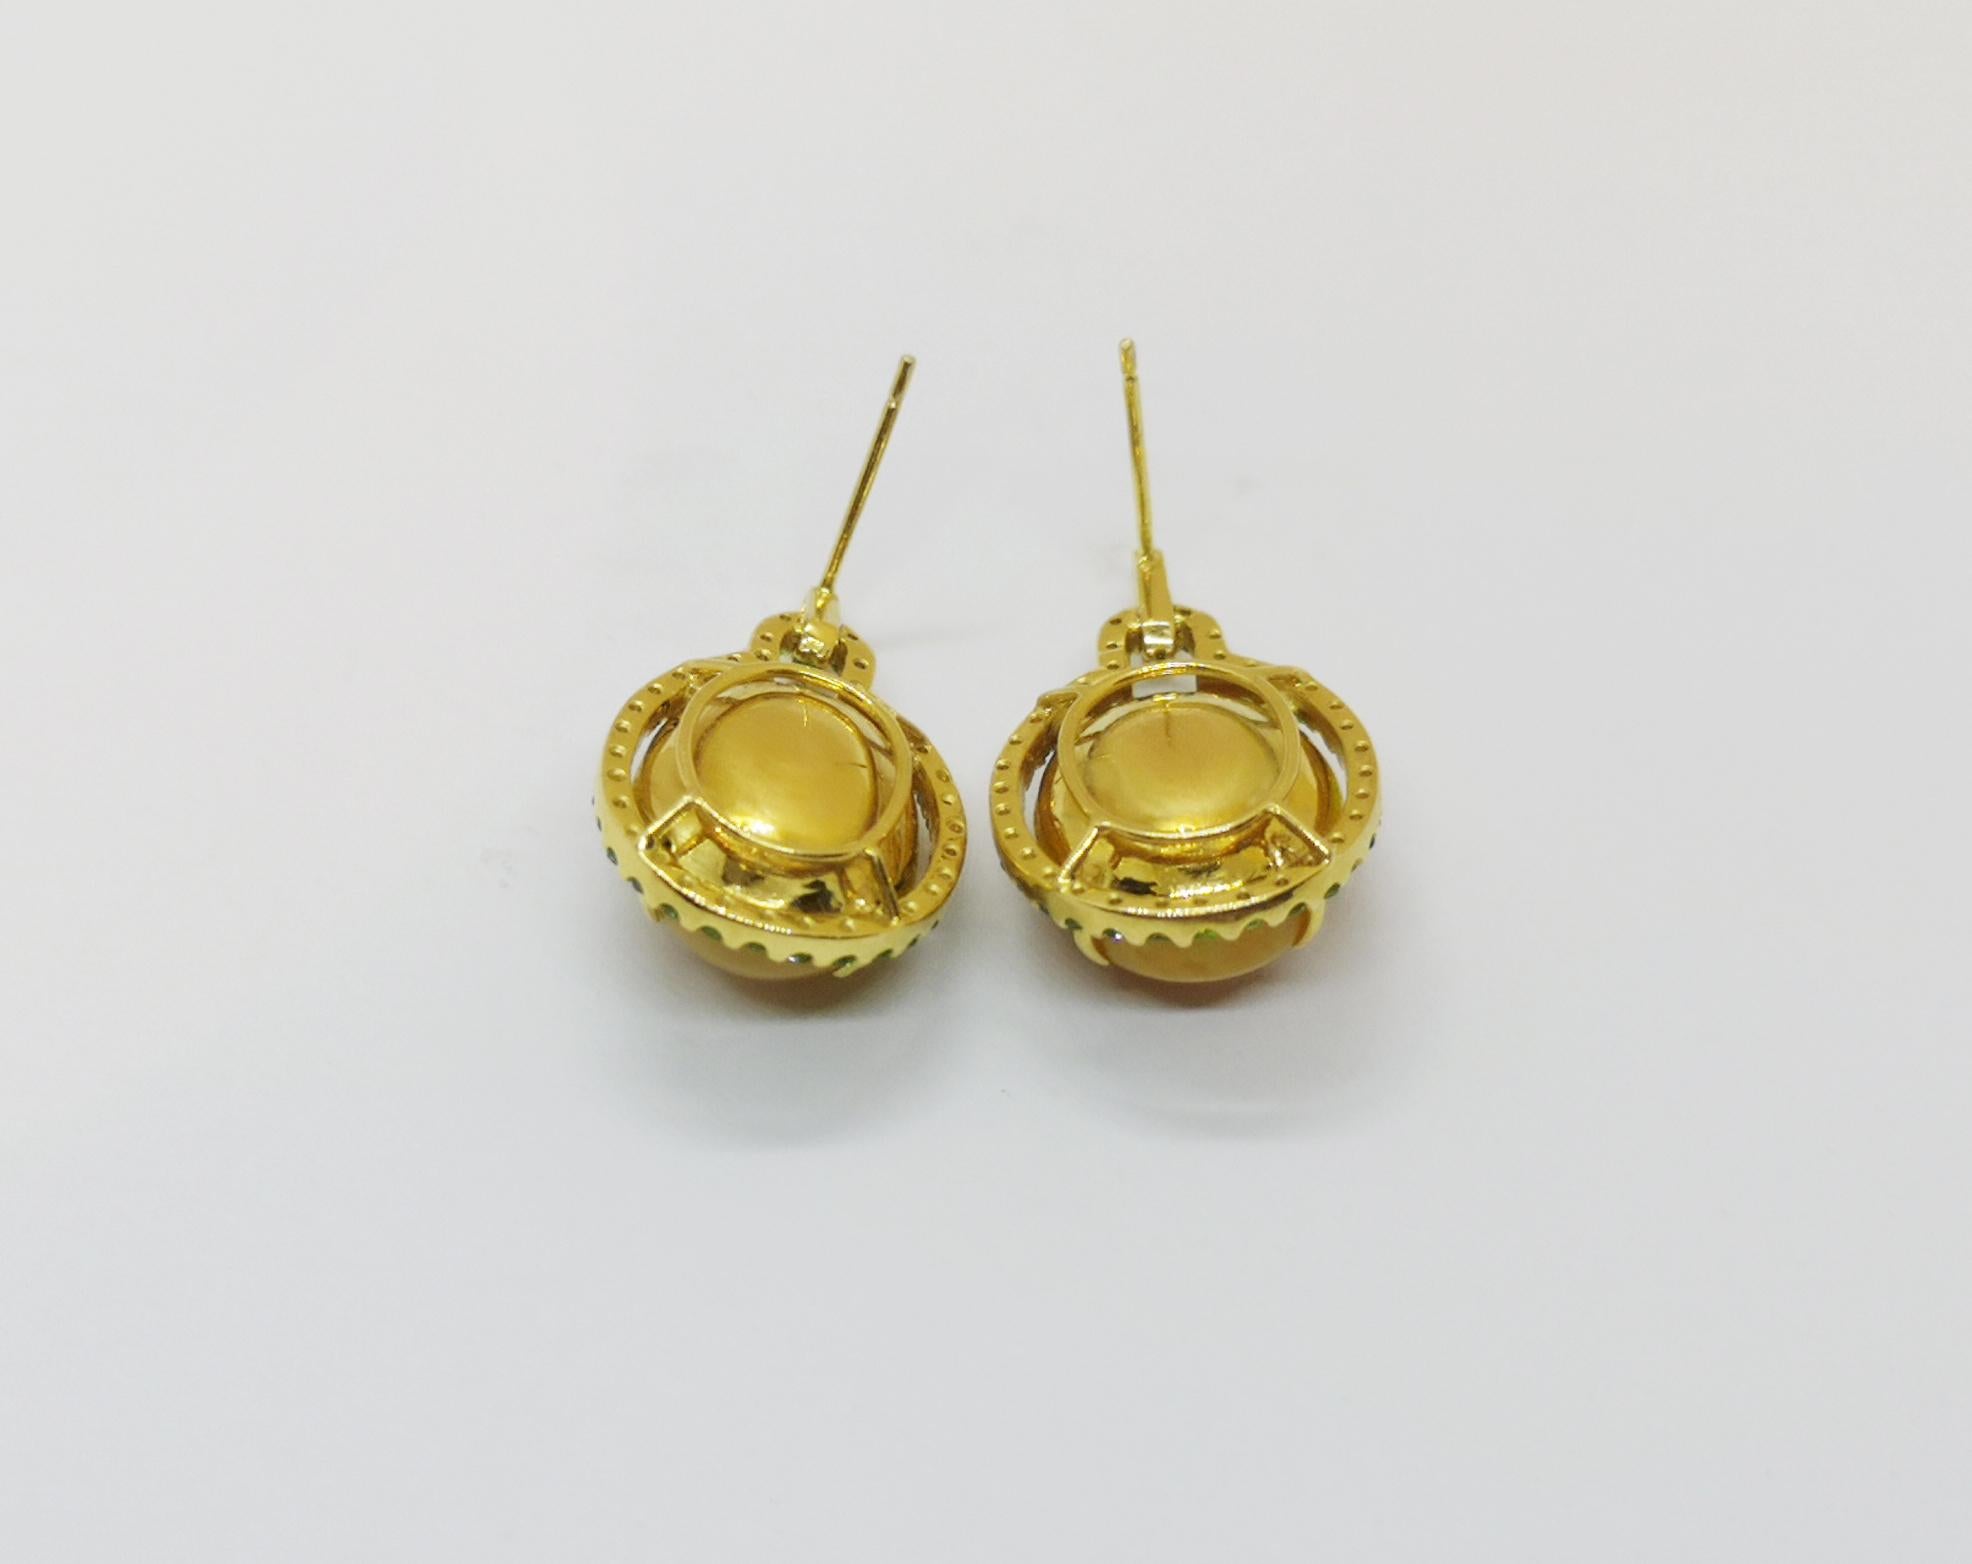 Opal 19.74 carats with Tsavorite 1.07 carats Earrings set in 18 Karat Gold Settings

Width: 1.7 cm
Length: 3.5 cm 

